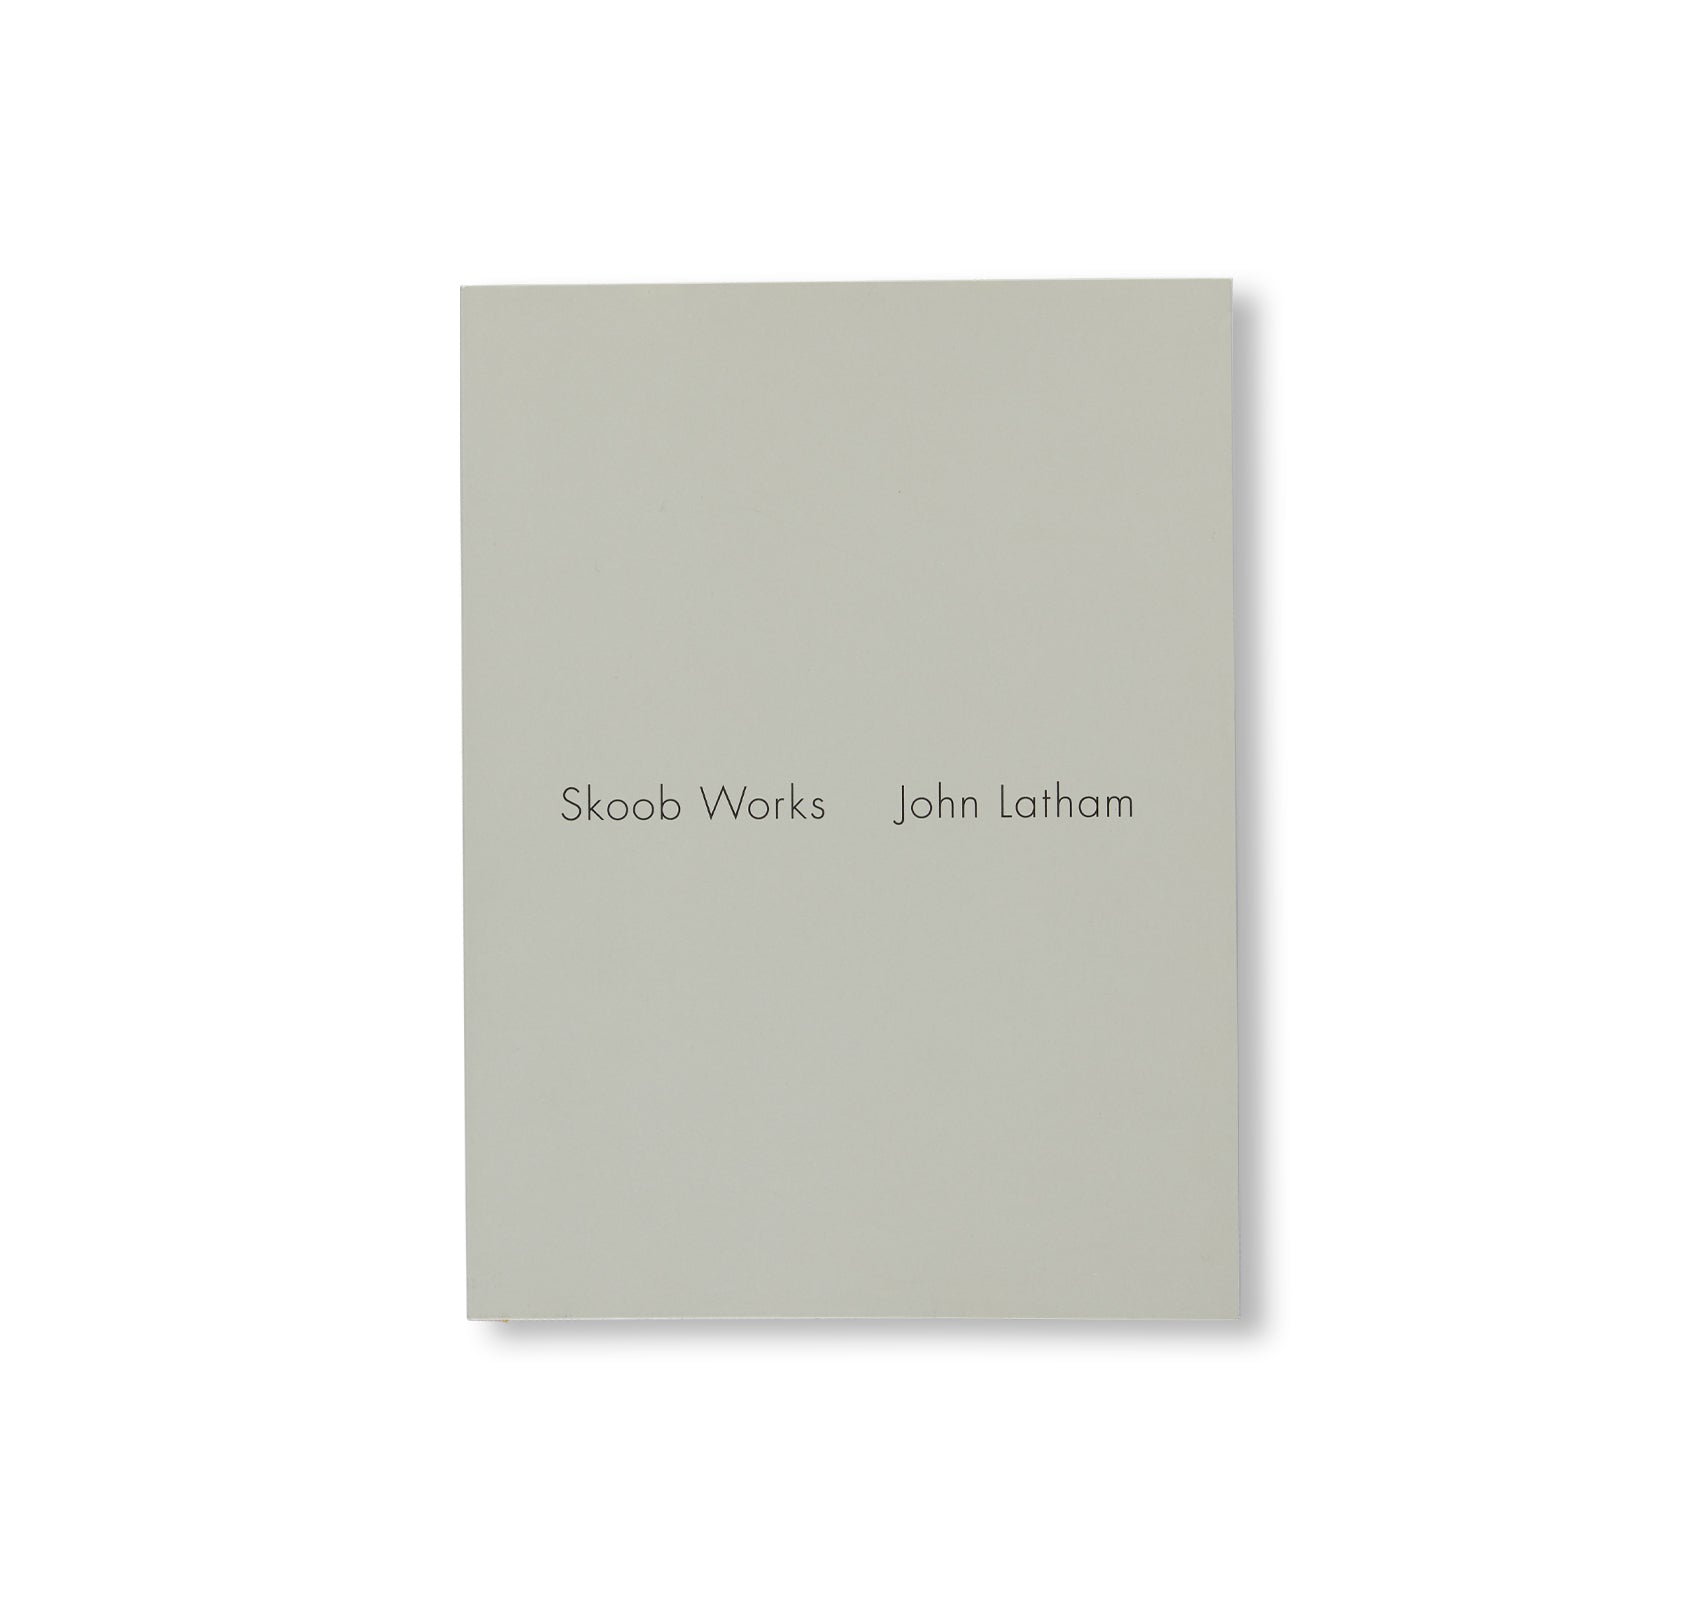 SKOOB WORKS by John Latham